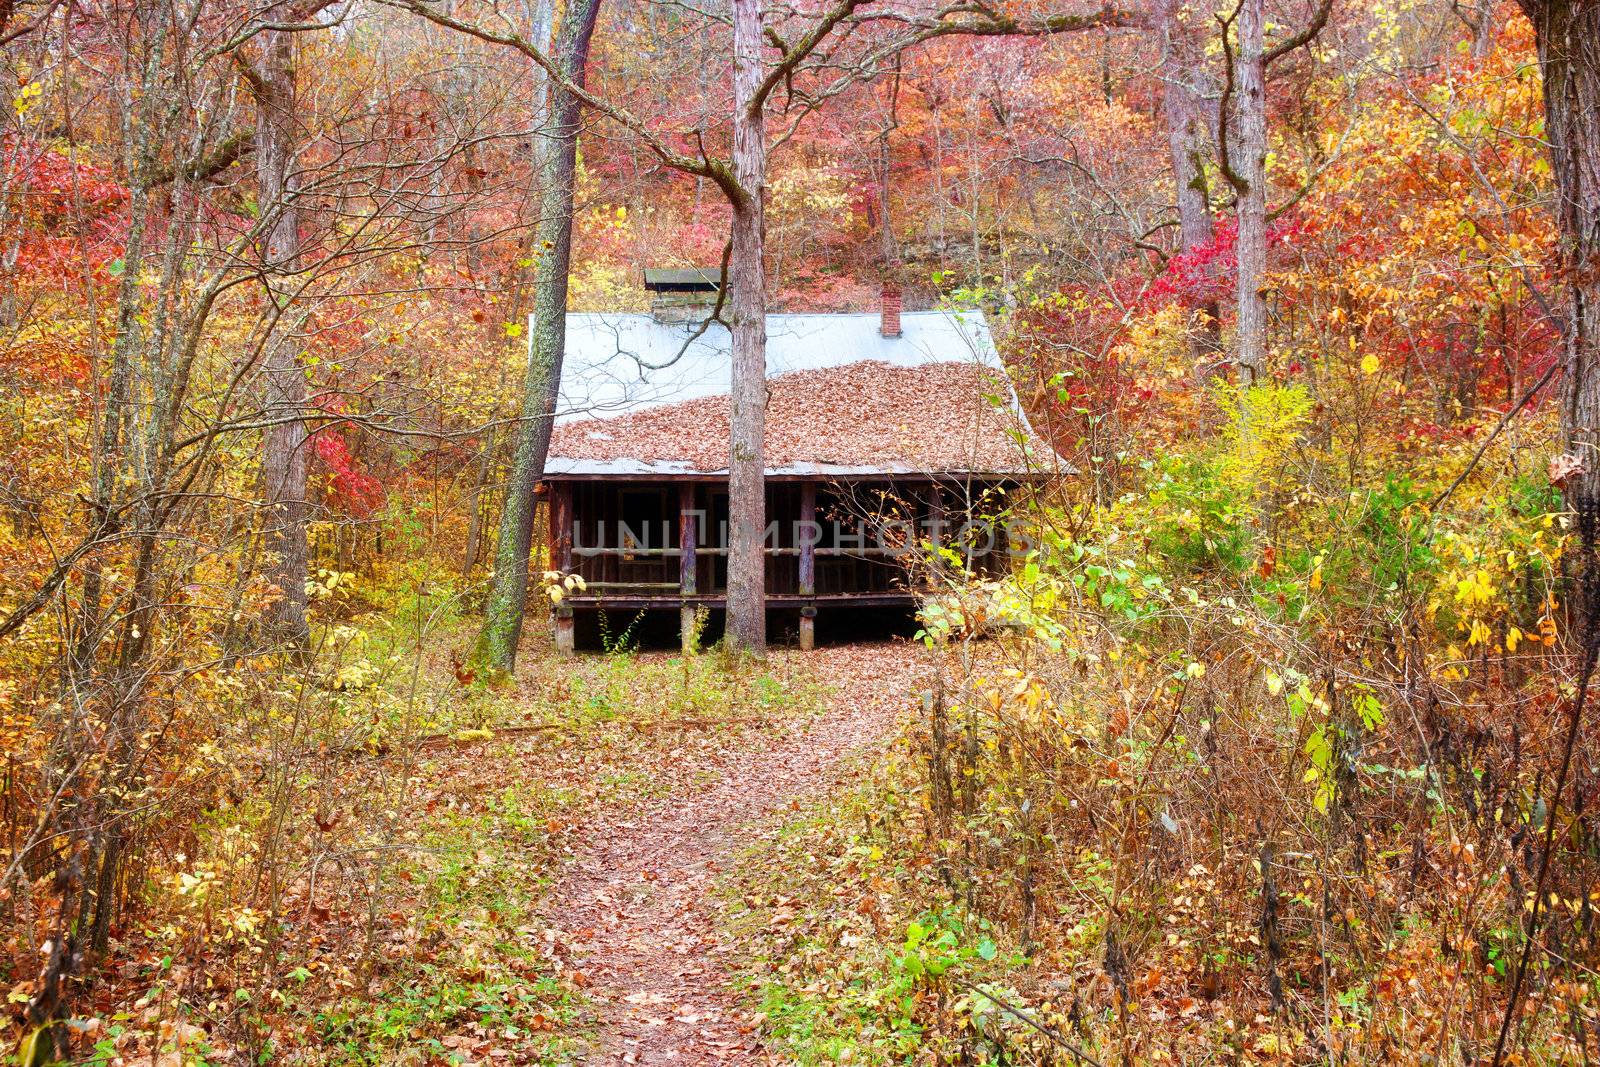 settlers cabin in missouri by clearviewstock